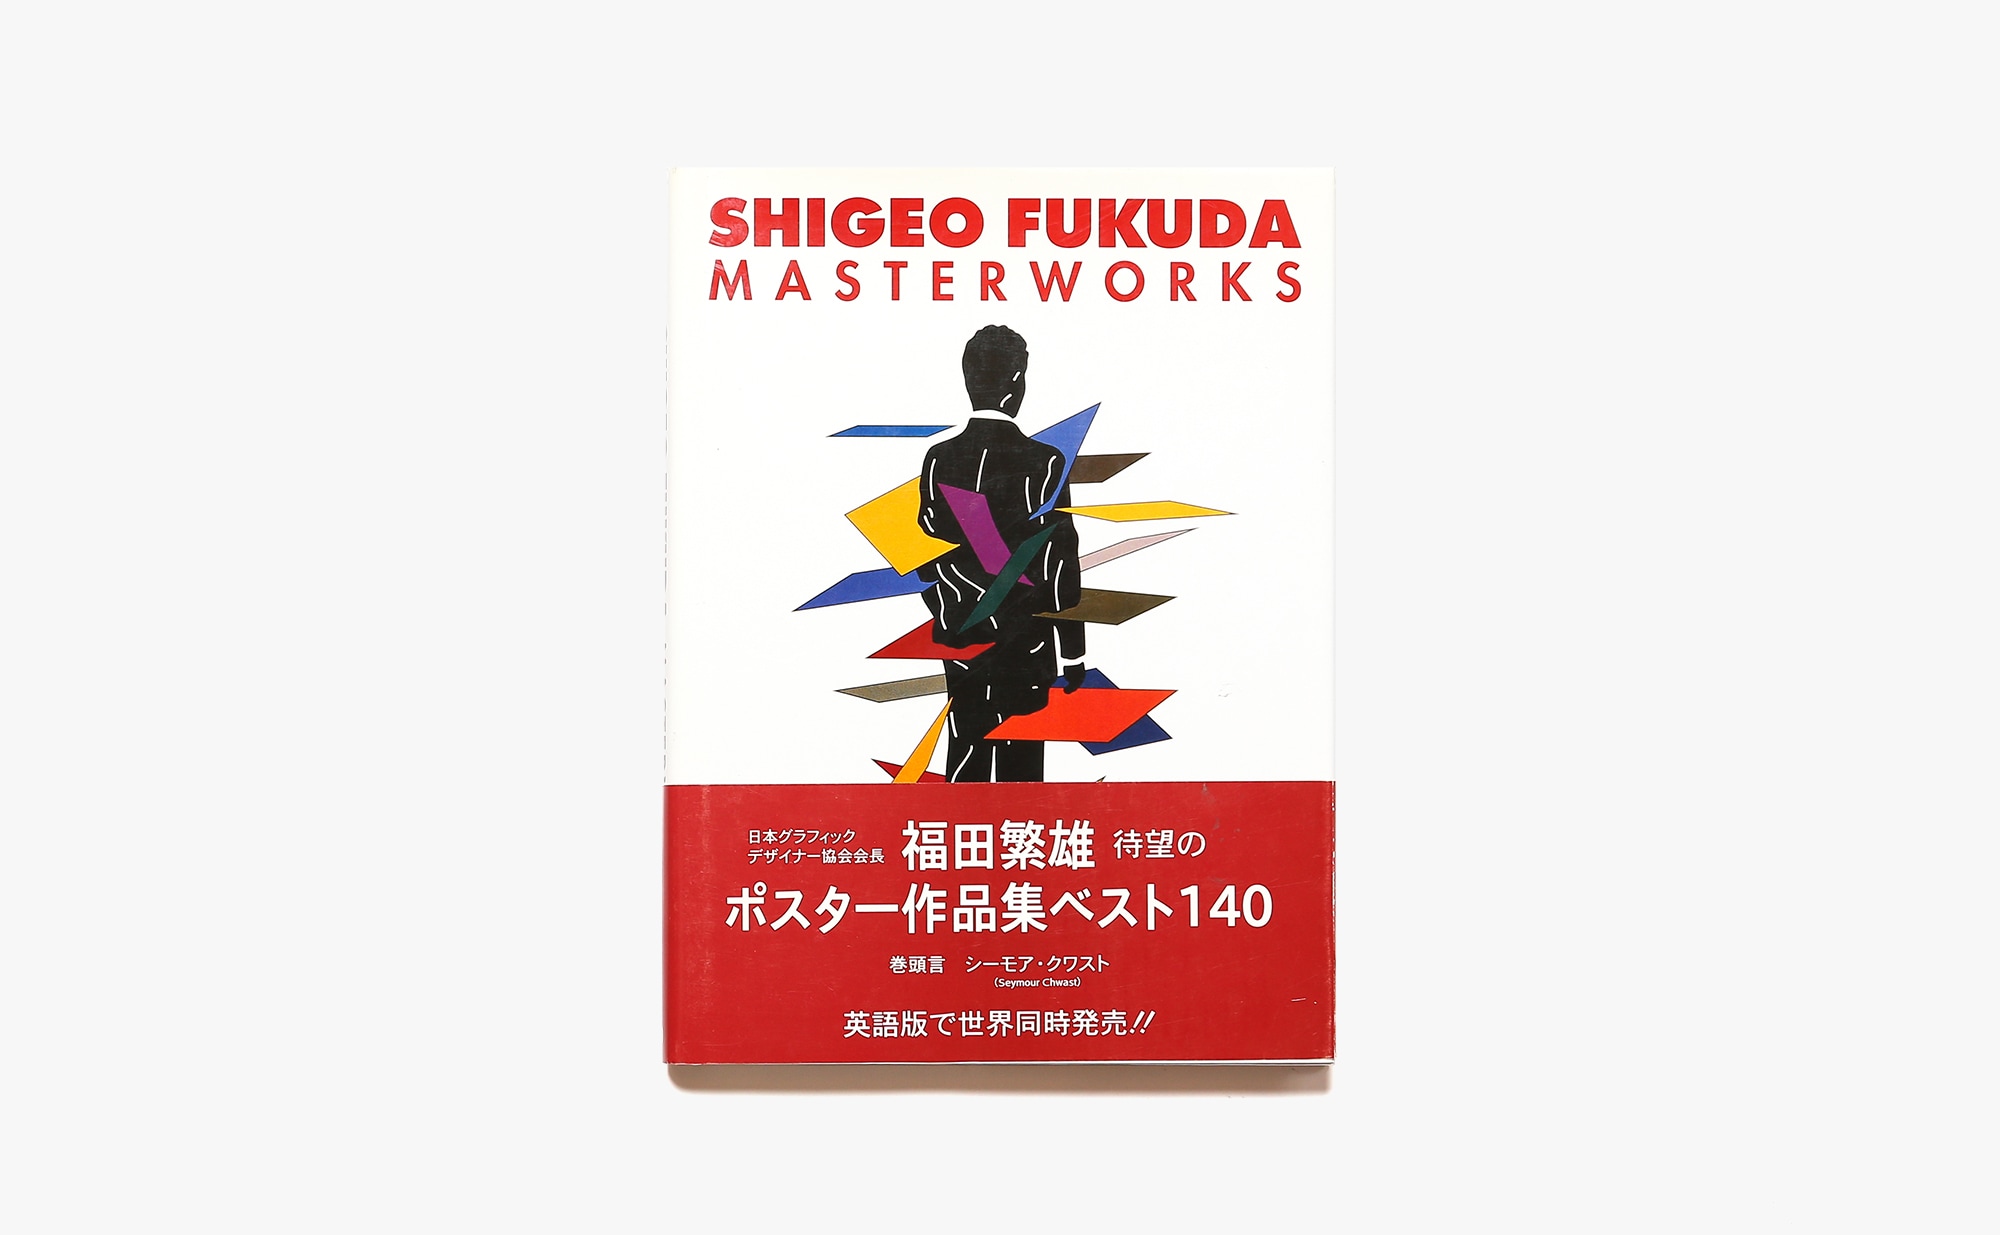 Shigeo Fukuda Masterworks